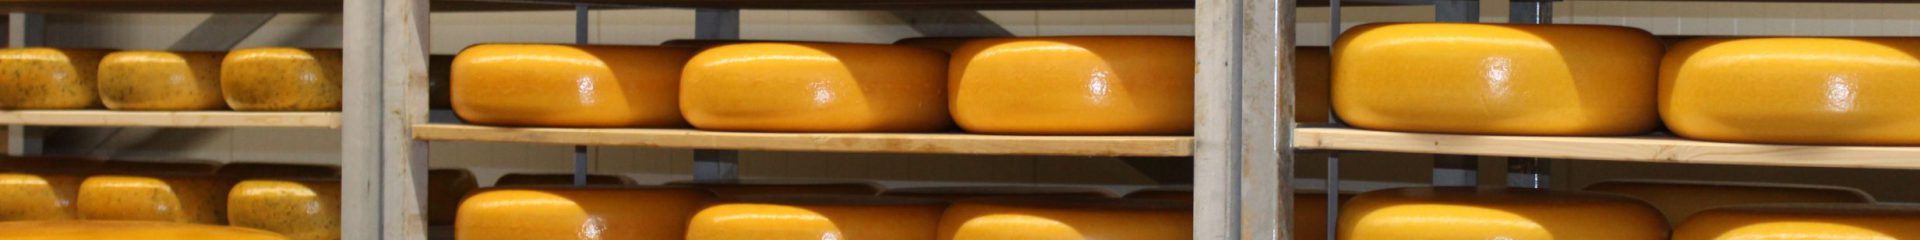 New: Aspargio farmhouse cheese with asparagus